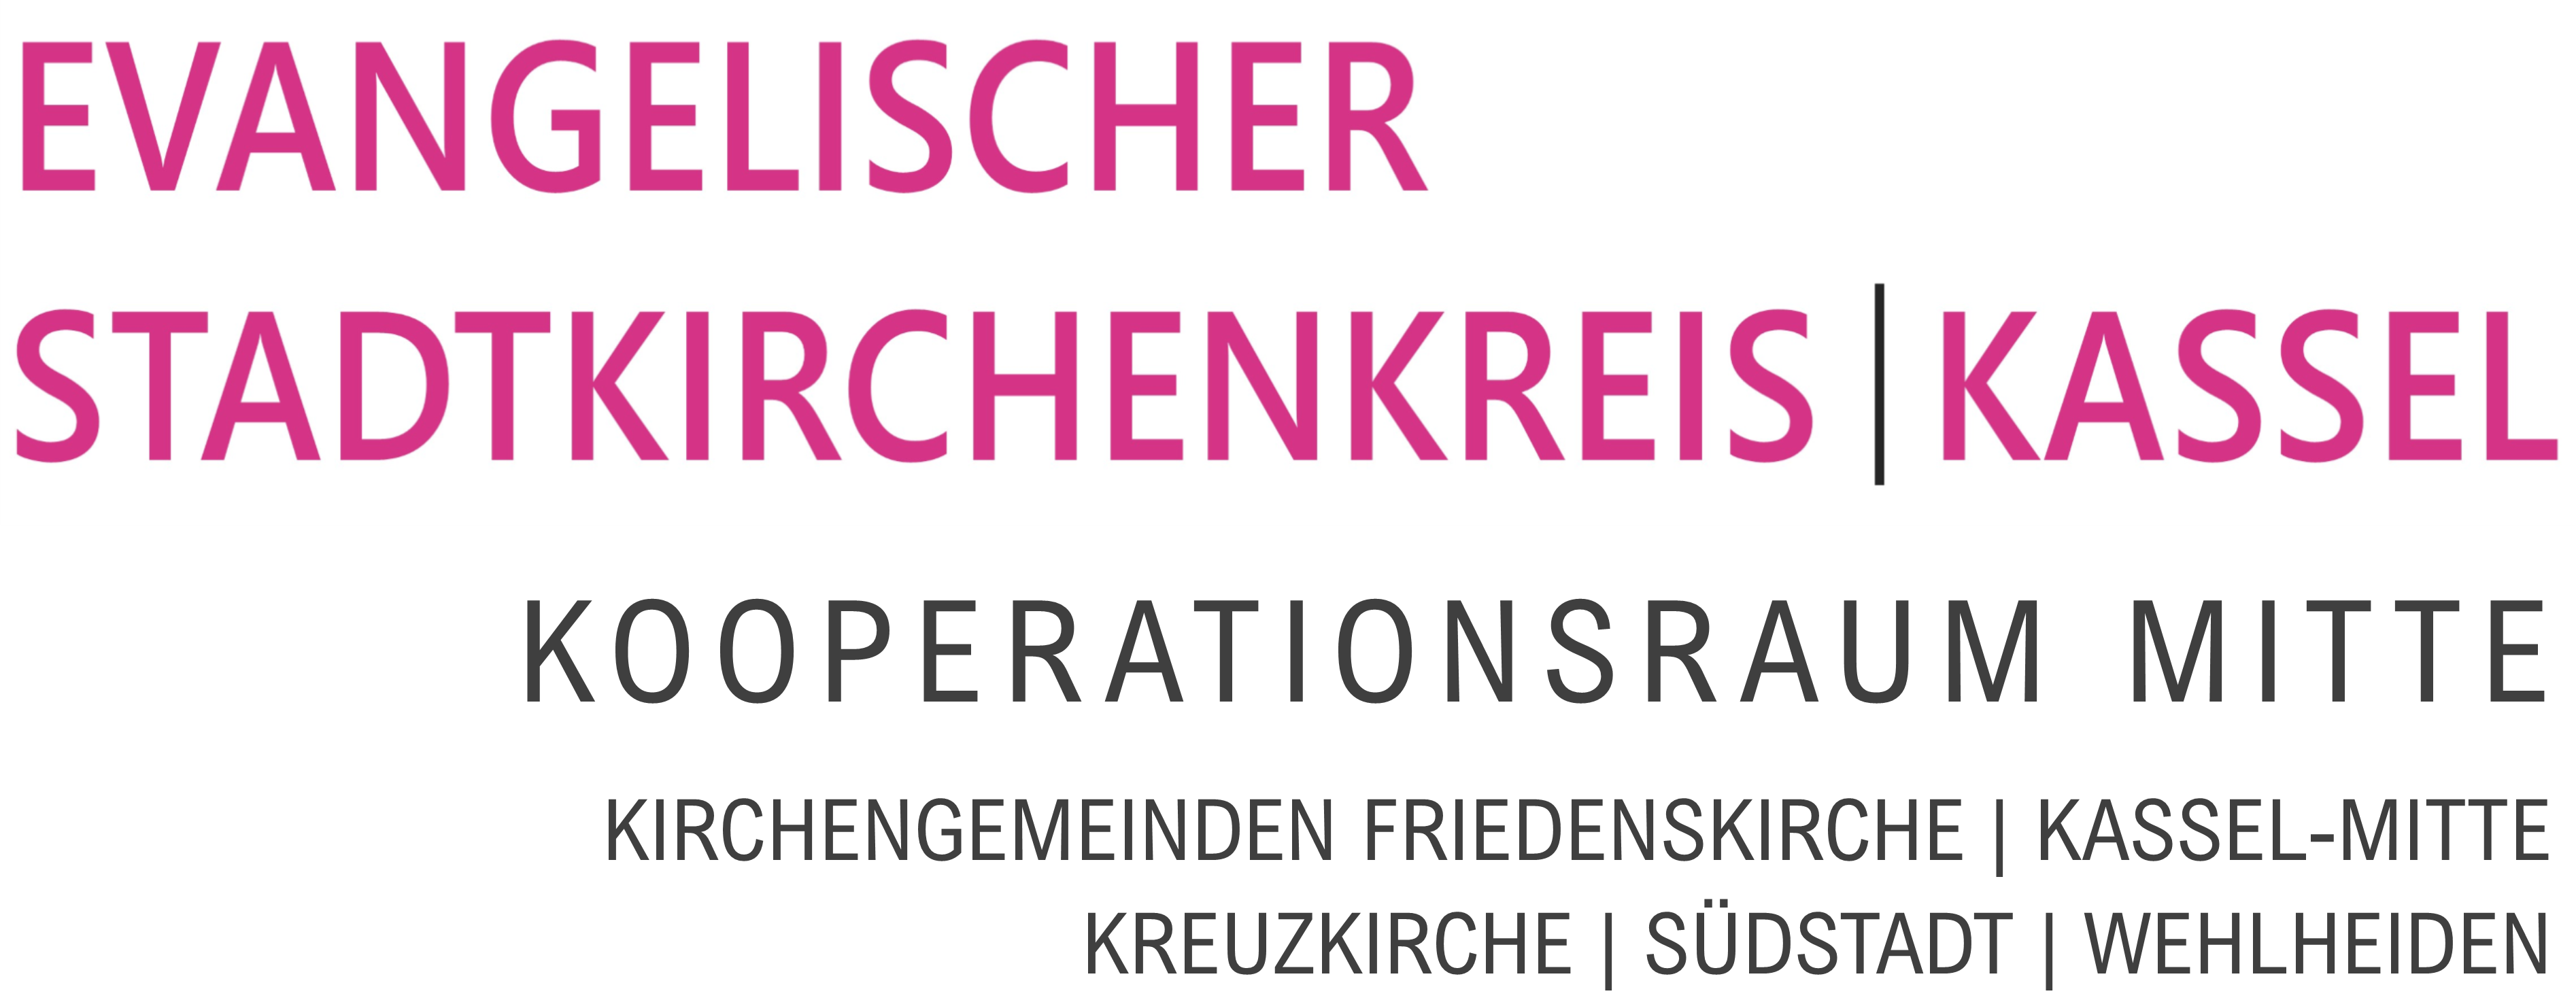 Ev. Stadtkirchenkreis Kassel - Kooperationsraum Mitte